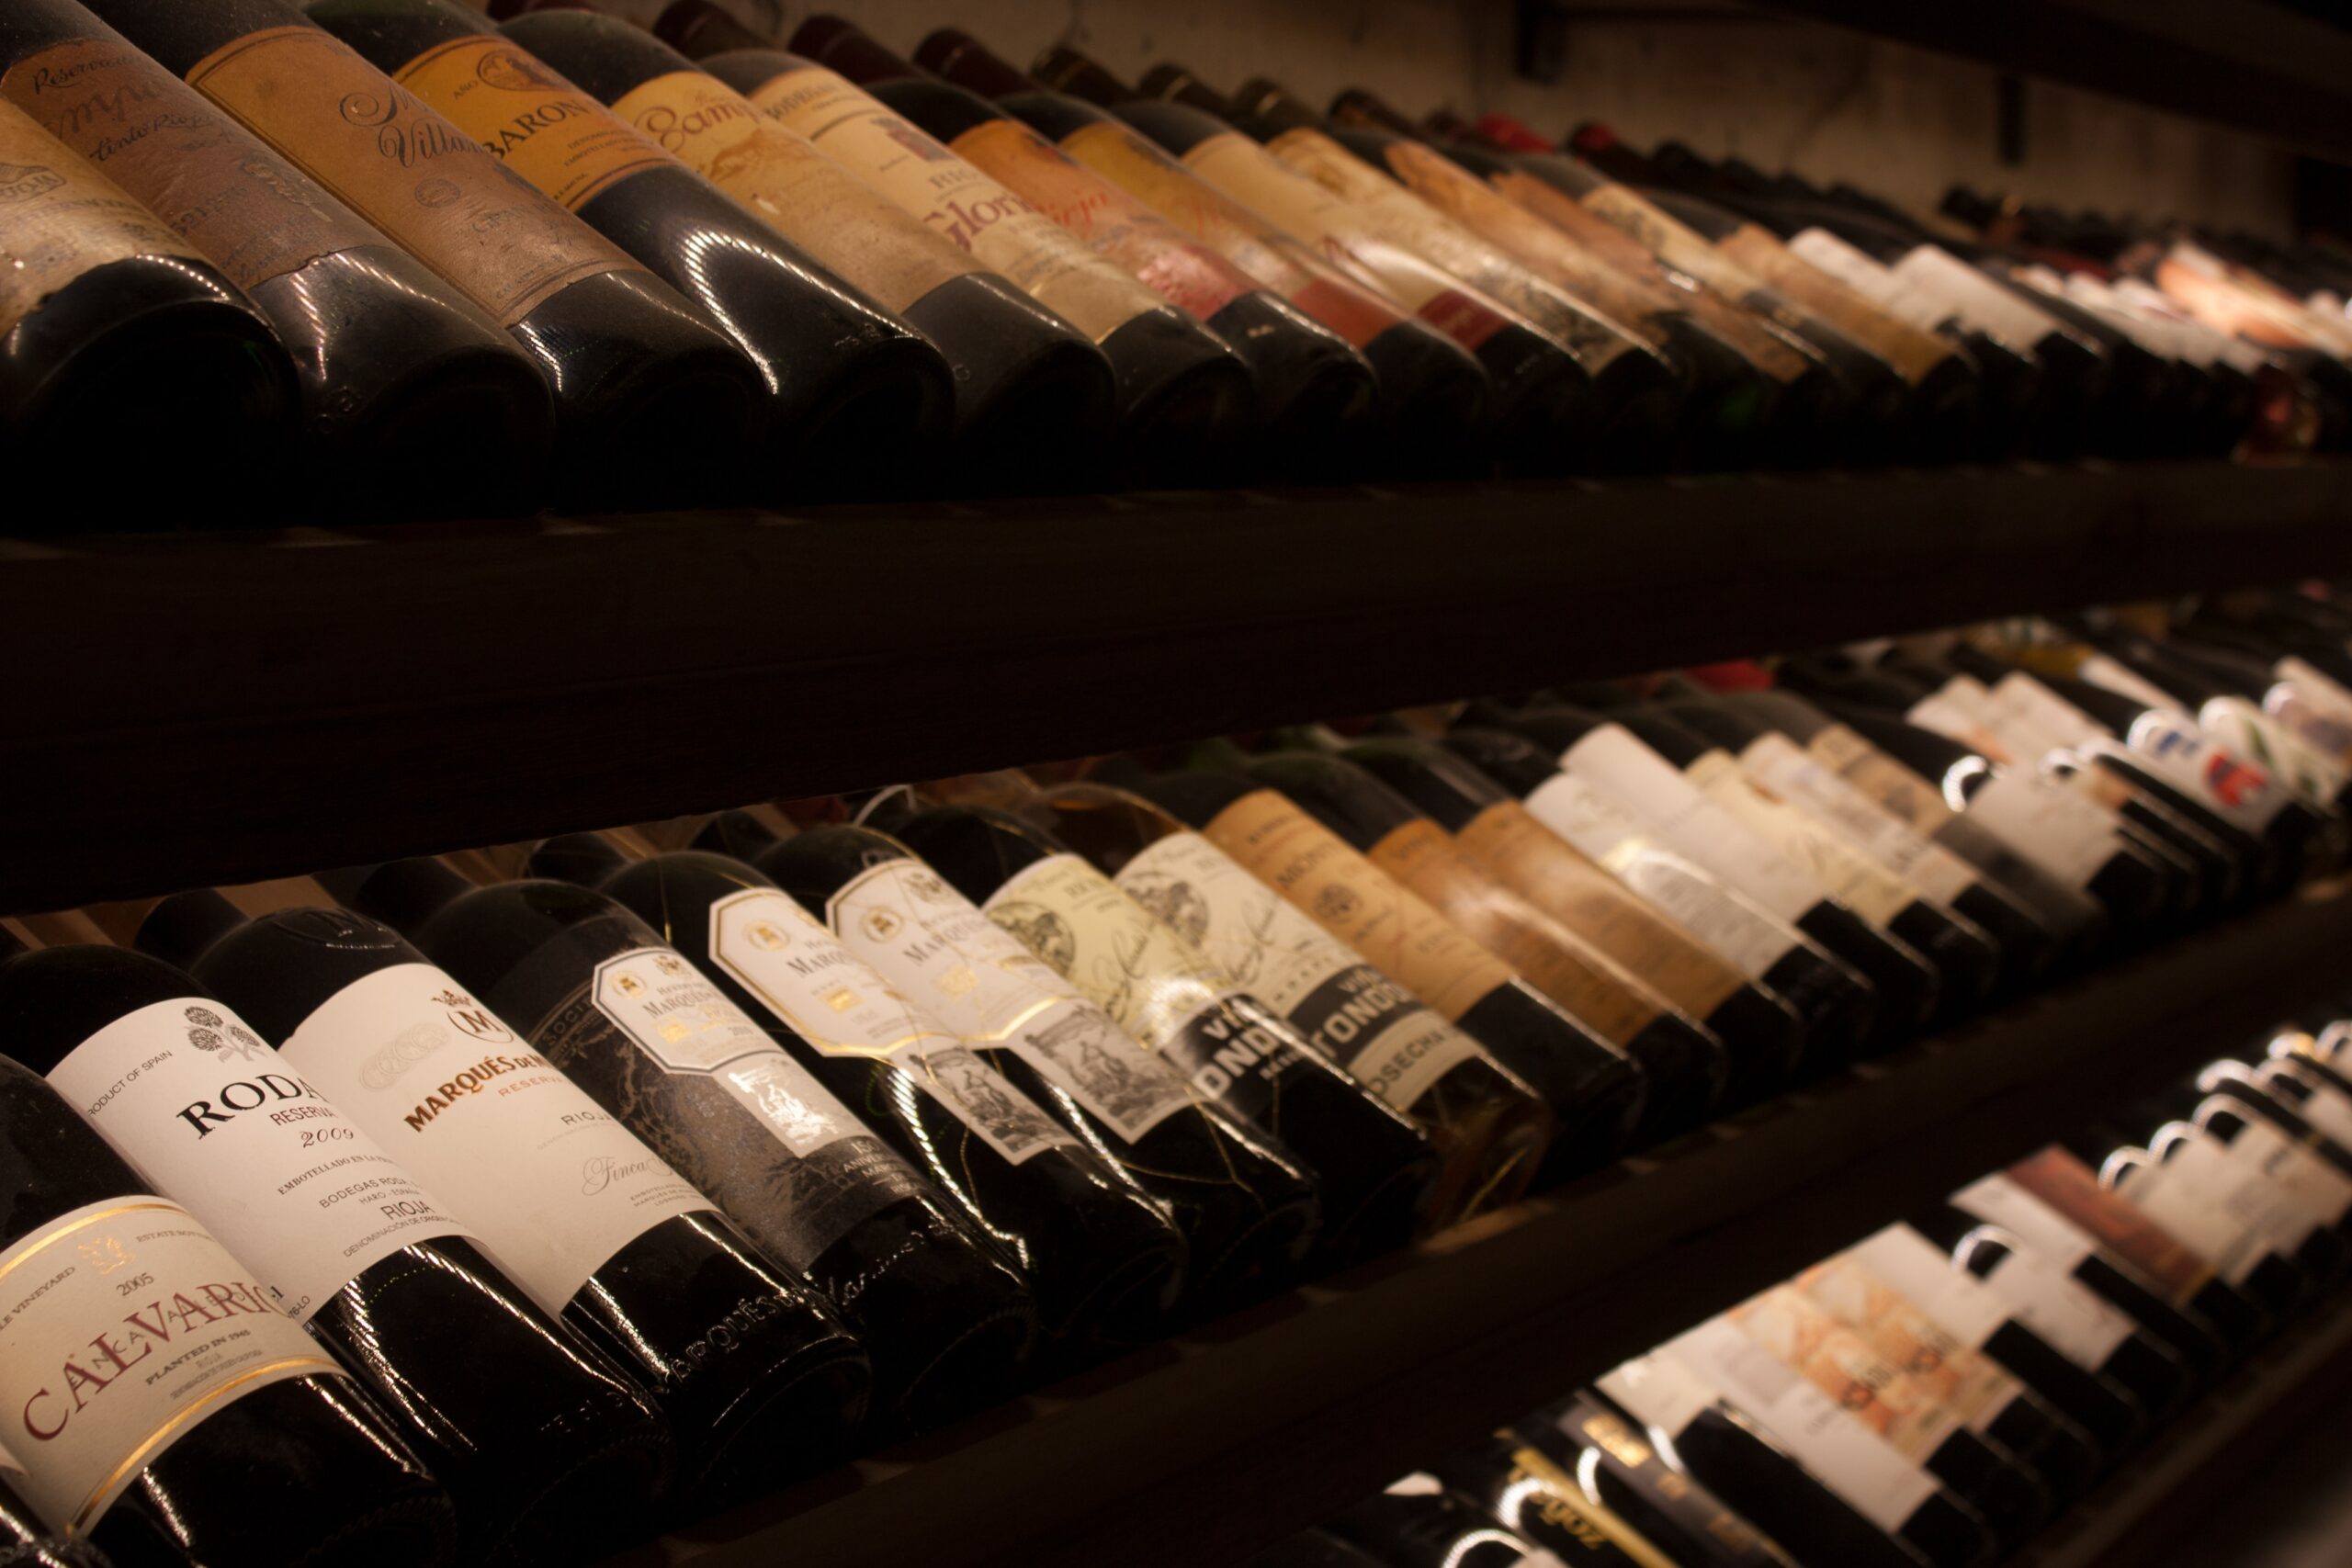 Wine Bottle, Vinos, Bodega, Vino, Winery, Wine, Wine Glass, Venu, Cellar, Cave, Brown, Drink, Alcohol, Bottle, Shelf, Beverage